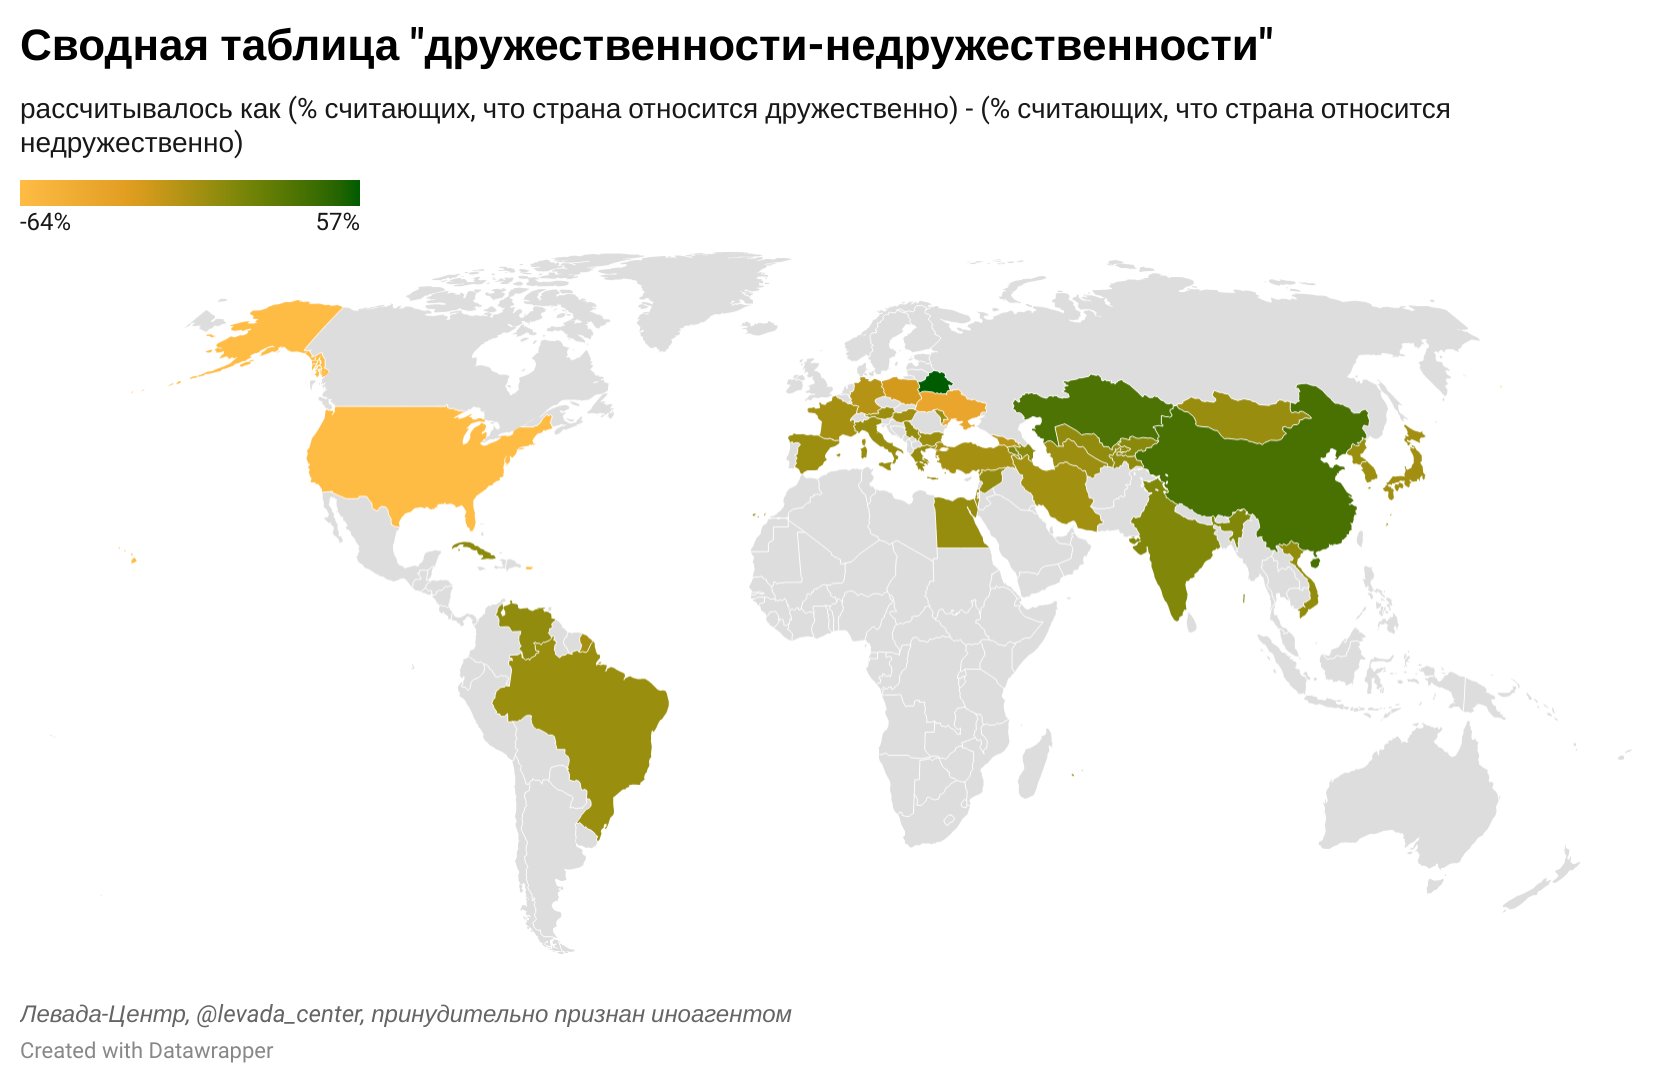 Какие страны недружественные. Список дружественных стран на карте. Карта недружественных стран. Дружественные и недружественные страны на карте.